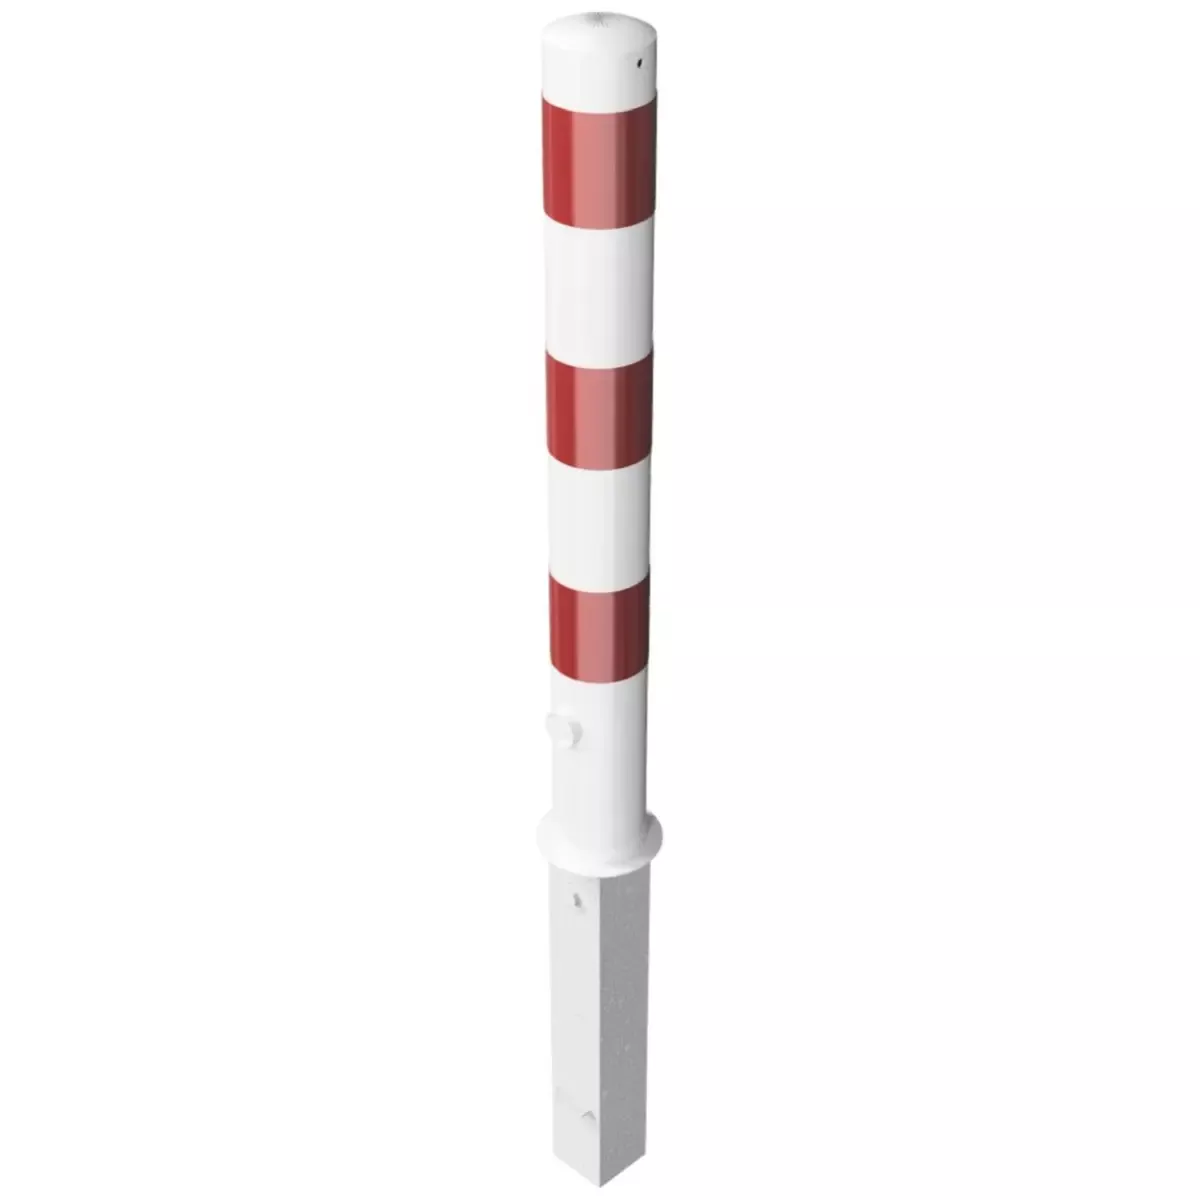 Absperrpfosten Stahlrohr Ø 102 x 2,5 mm ohne Öse, herausnehmbar mit Dreikantverschluss, weiß-rot (inkl. Bodenhülse)